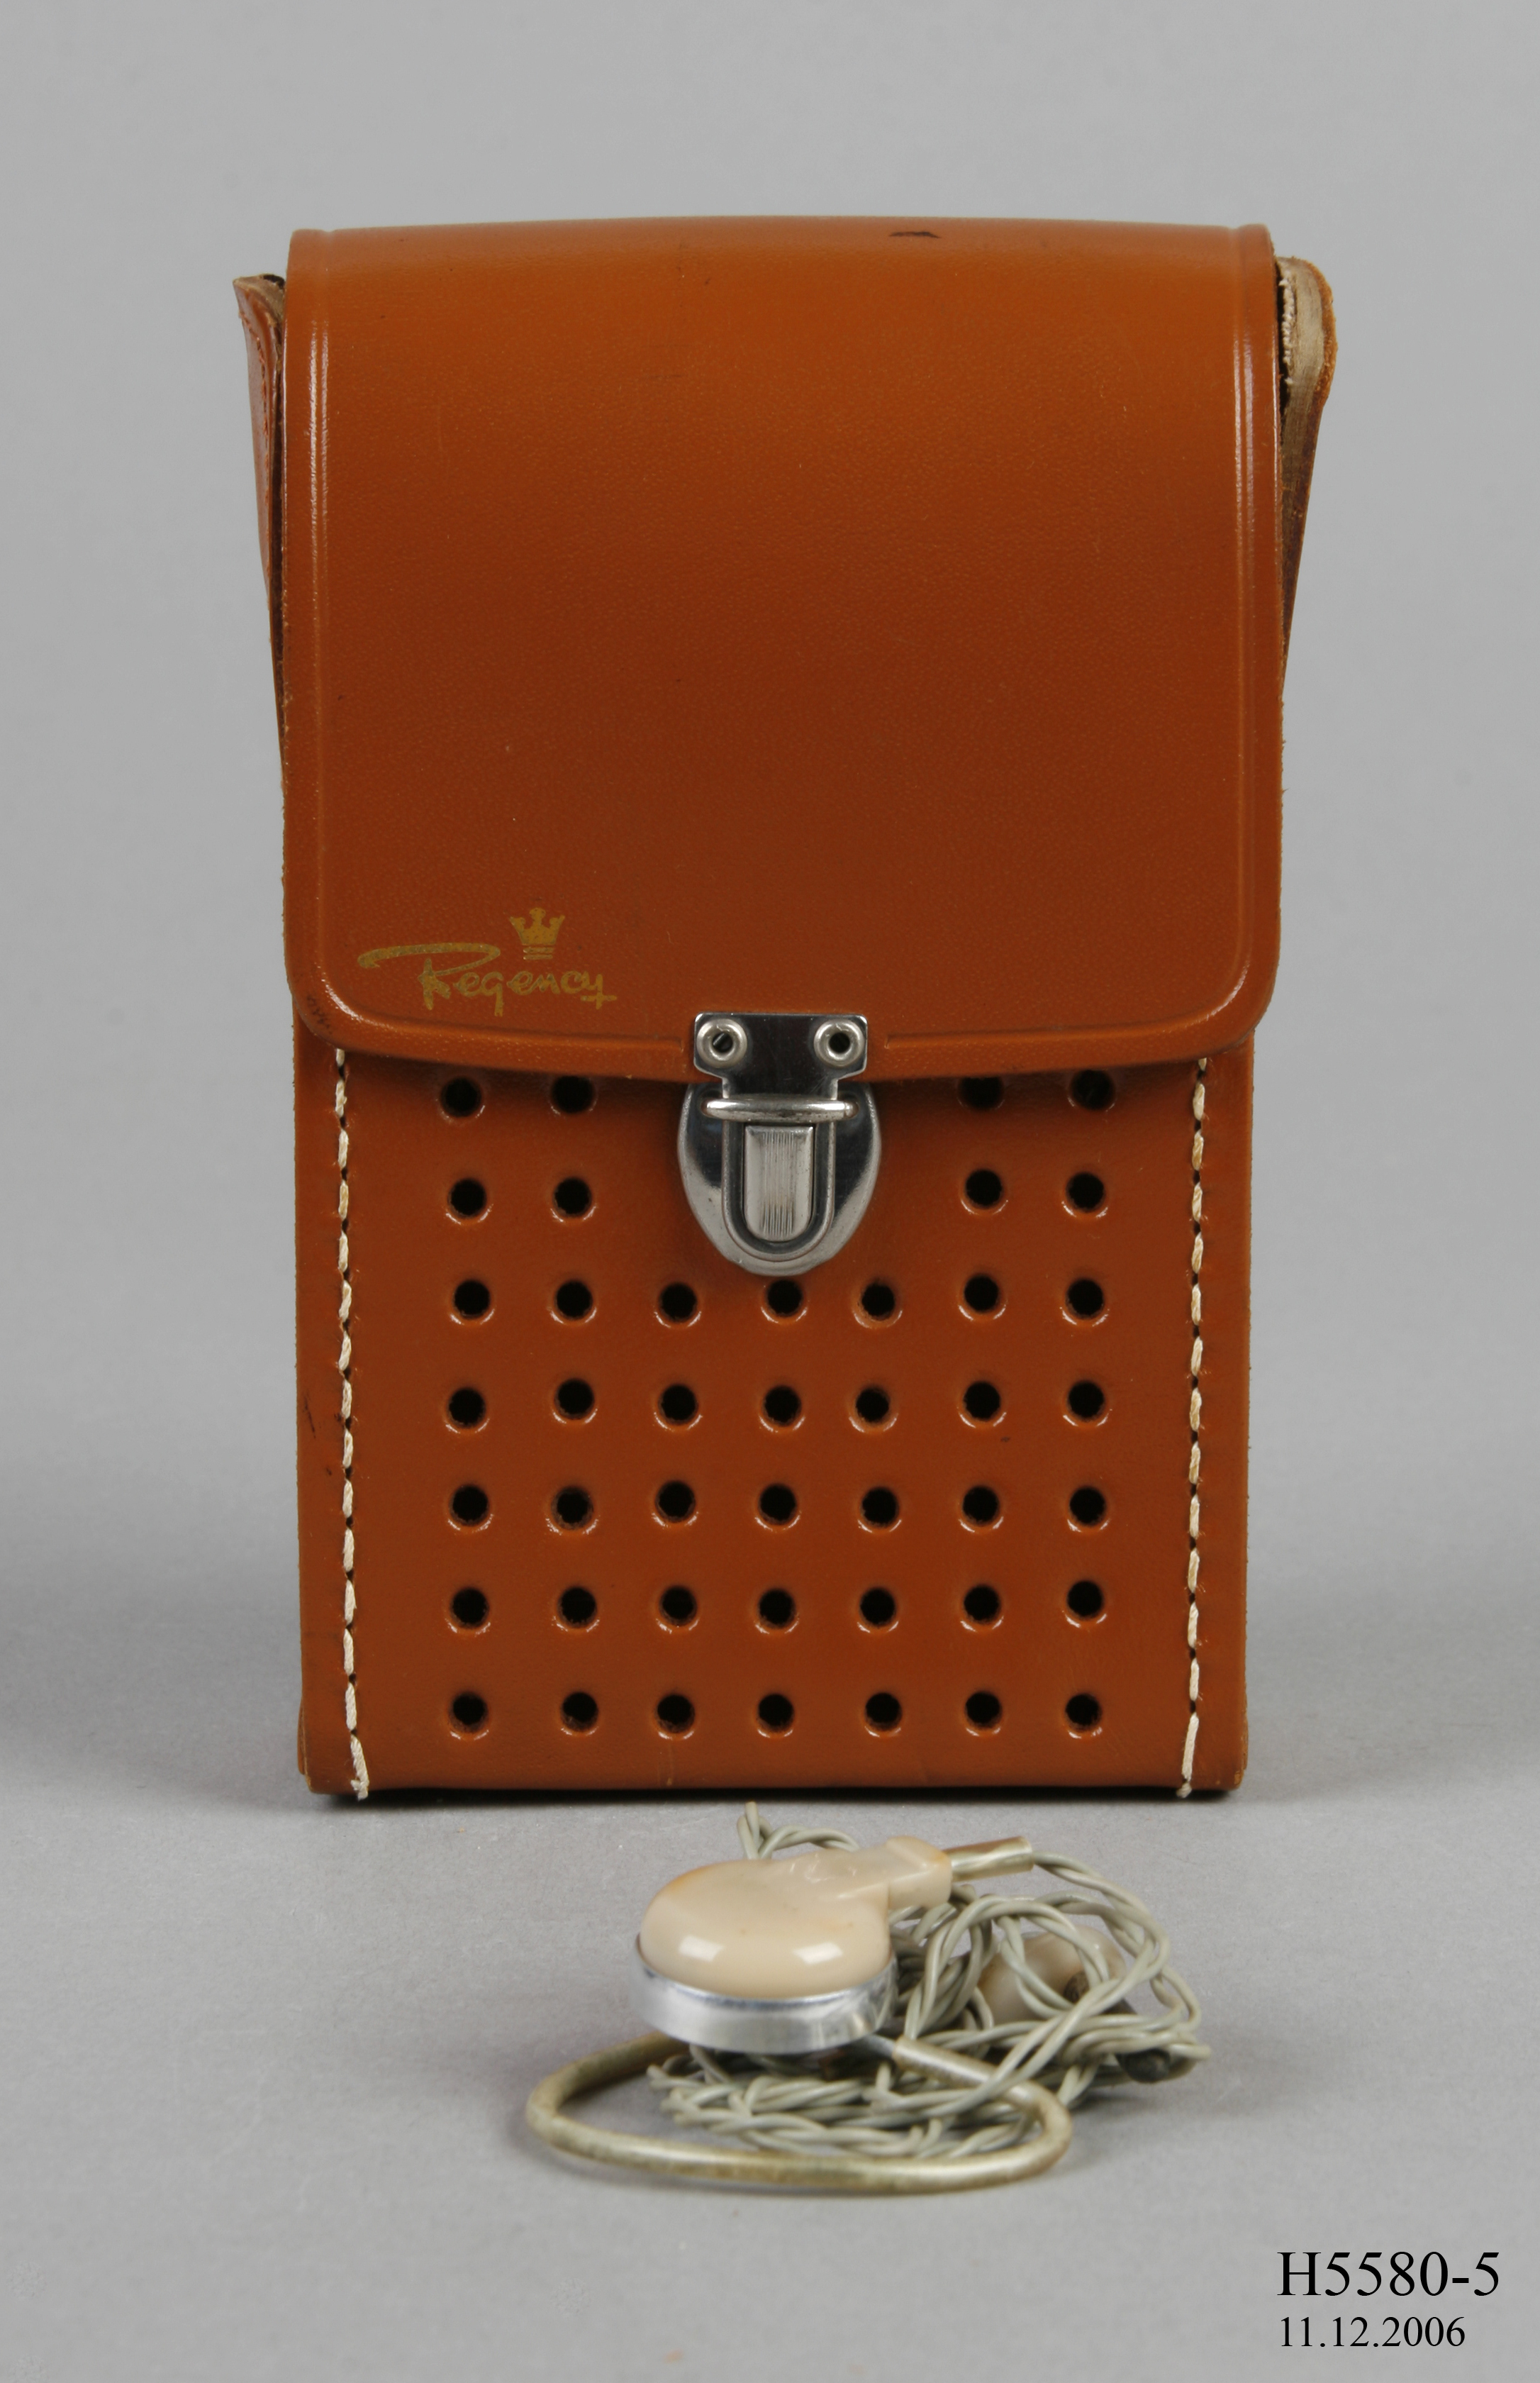 Leather brown case for Regency transistor radio